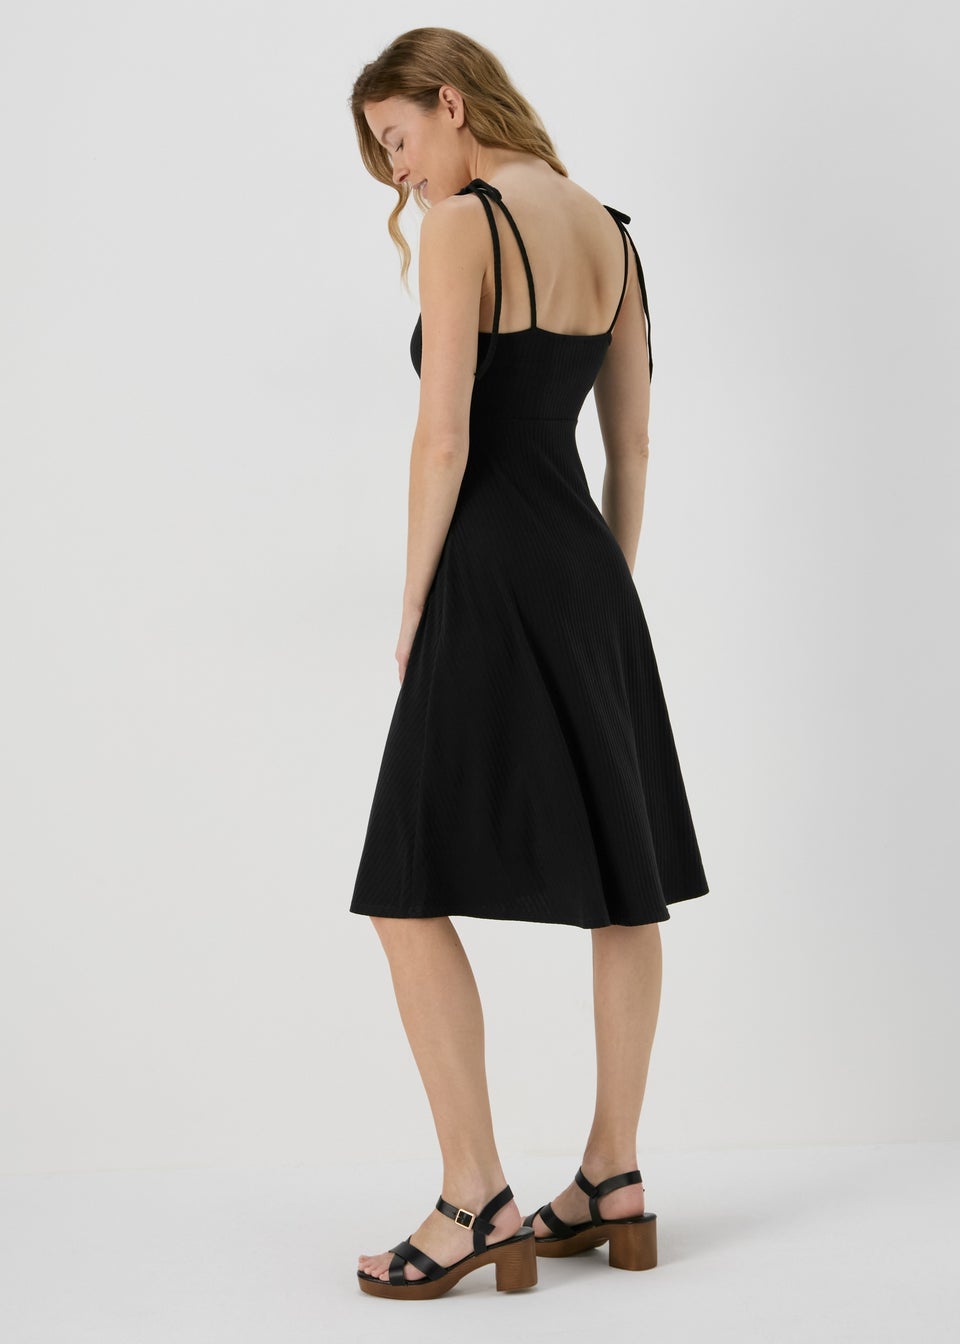 Black Strappy Ribbed Cami Dress